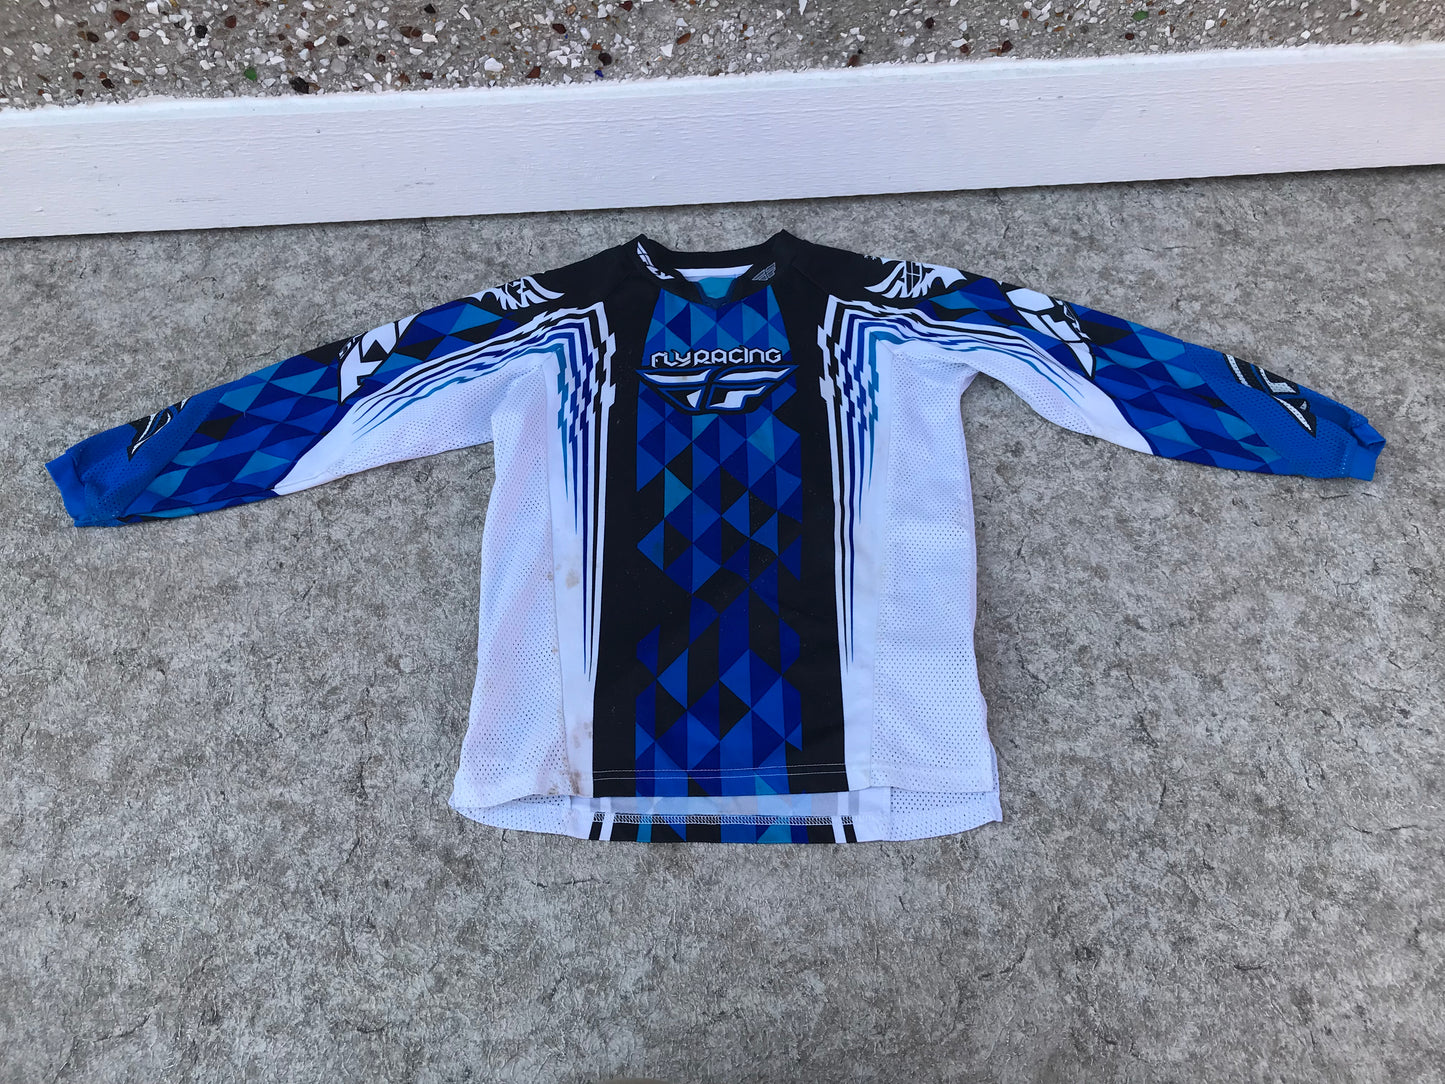 Motocross BMX Dirt Bike Child Size Large 10-12 Fly Racing Jersey White Blue Few Marks